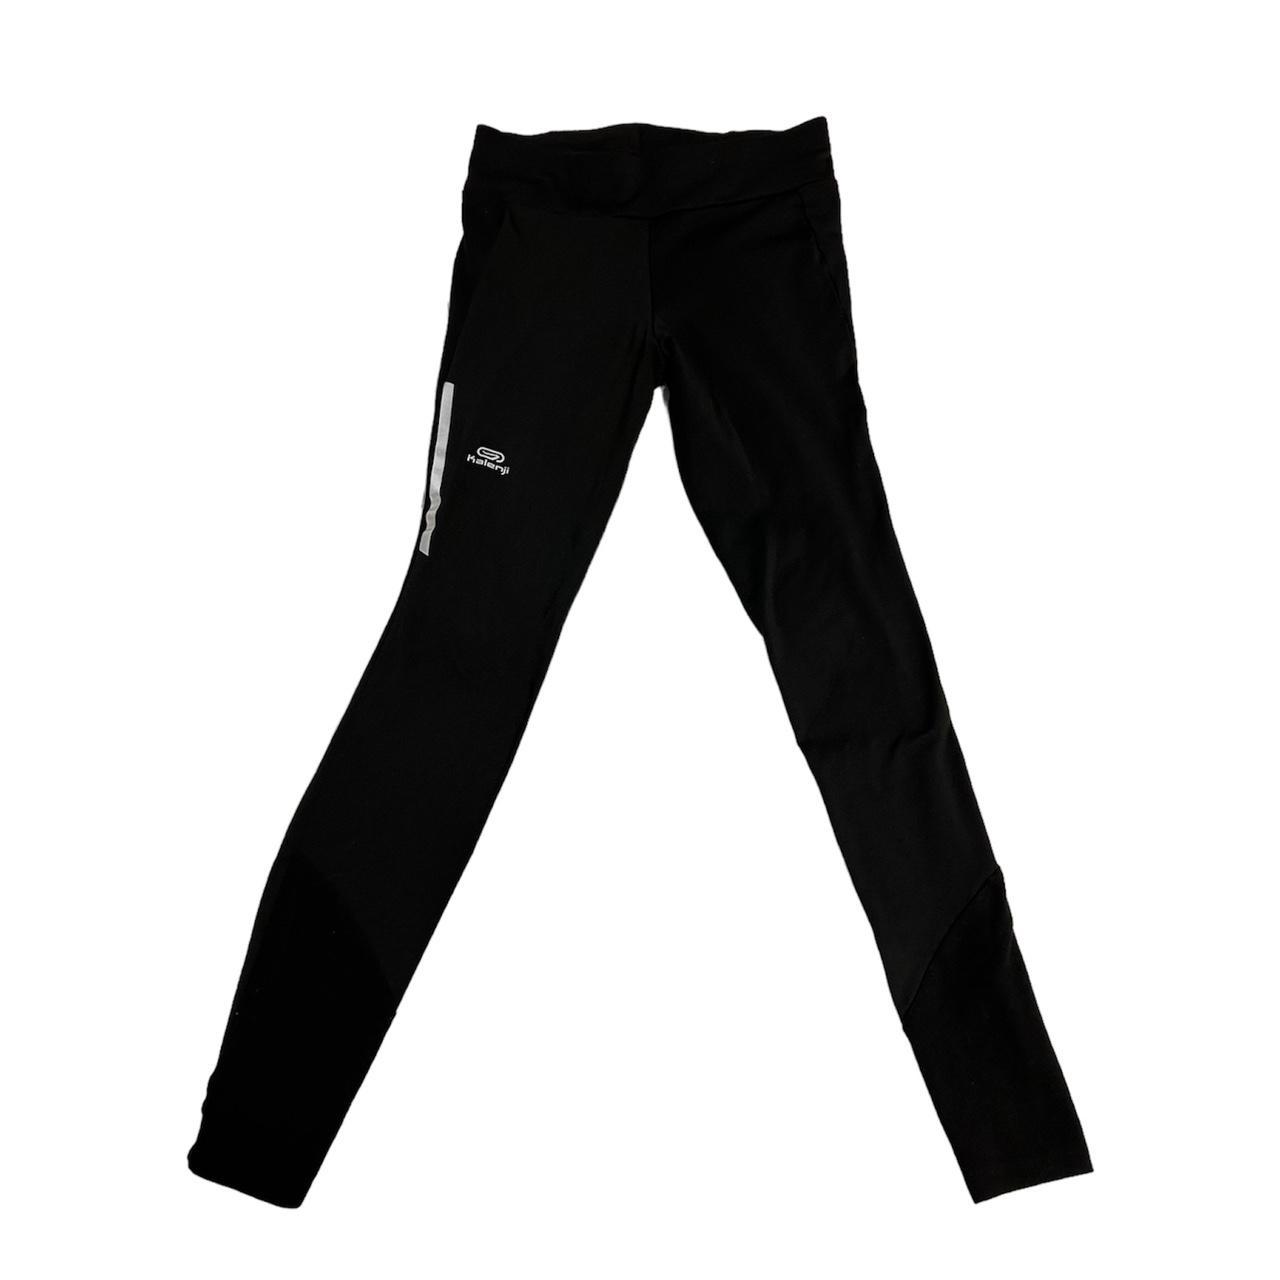 Kalenji black thermal leggings • sportswear / - Depop